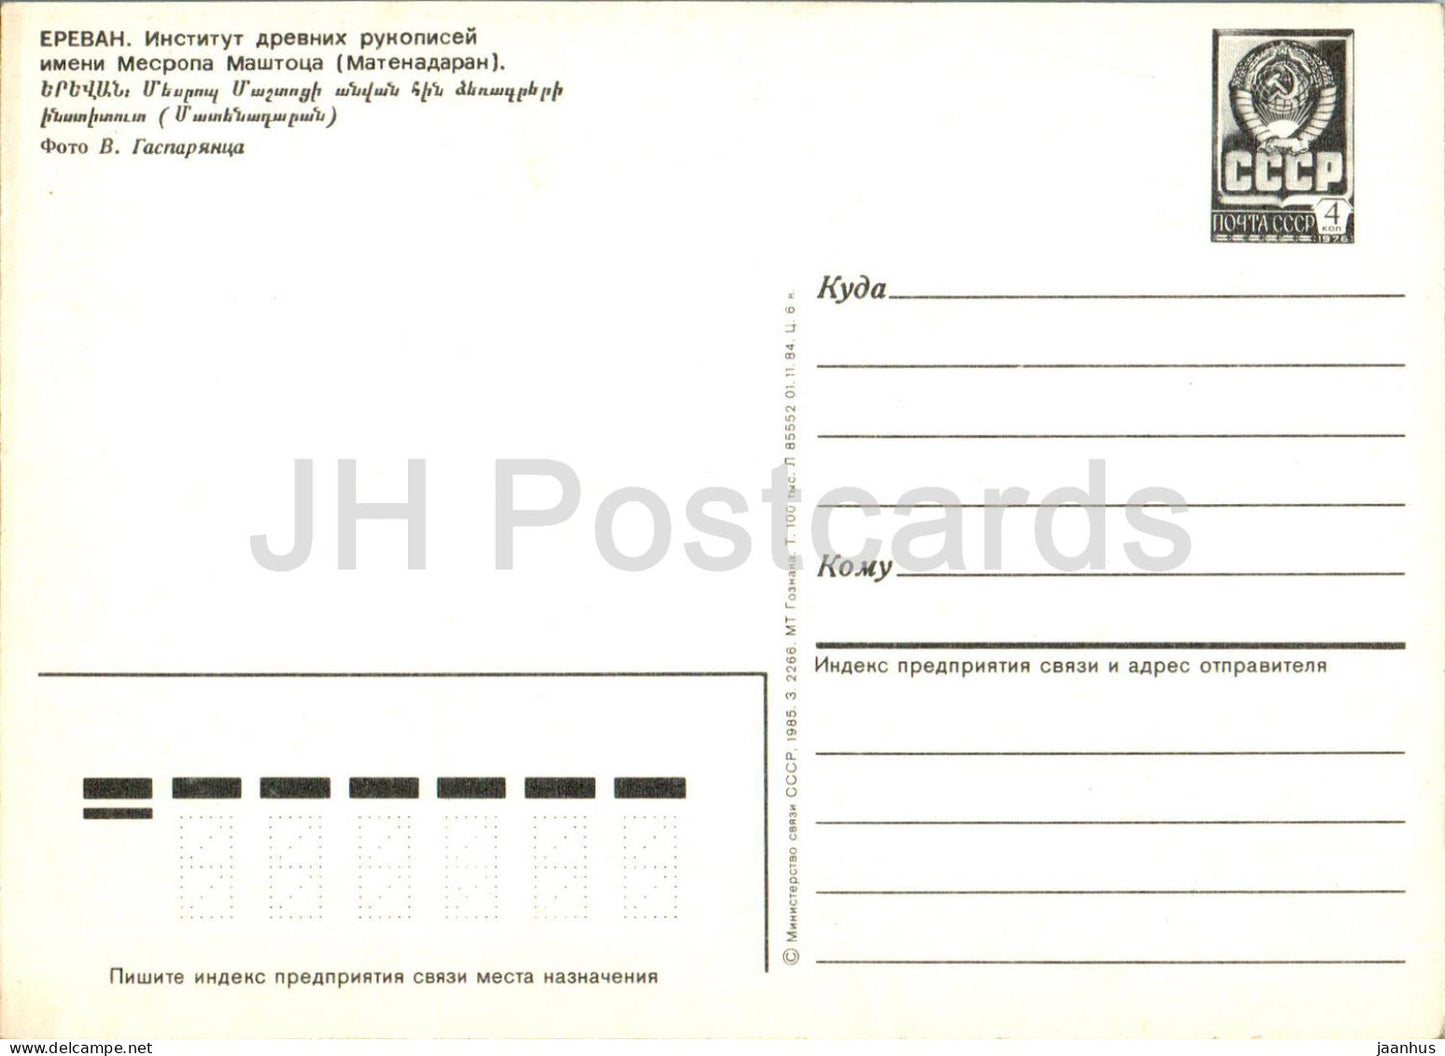 Yerevan - Matenadaran - the Institute of Ancient Manuscripts - postal stationery - 1985 - Armenia USSR - unused